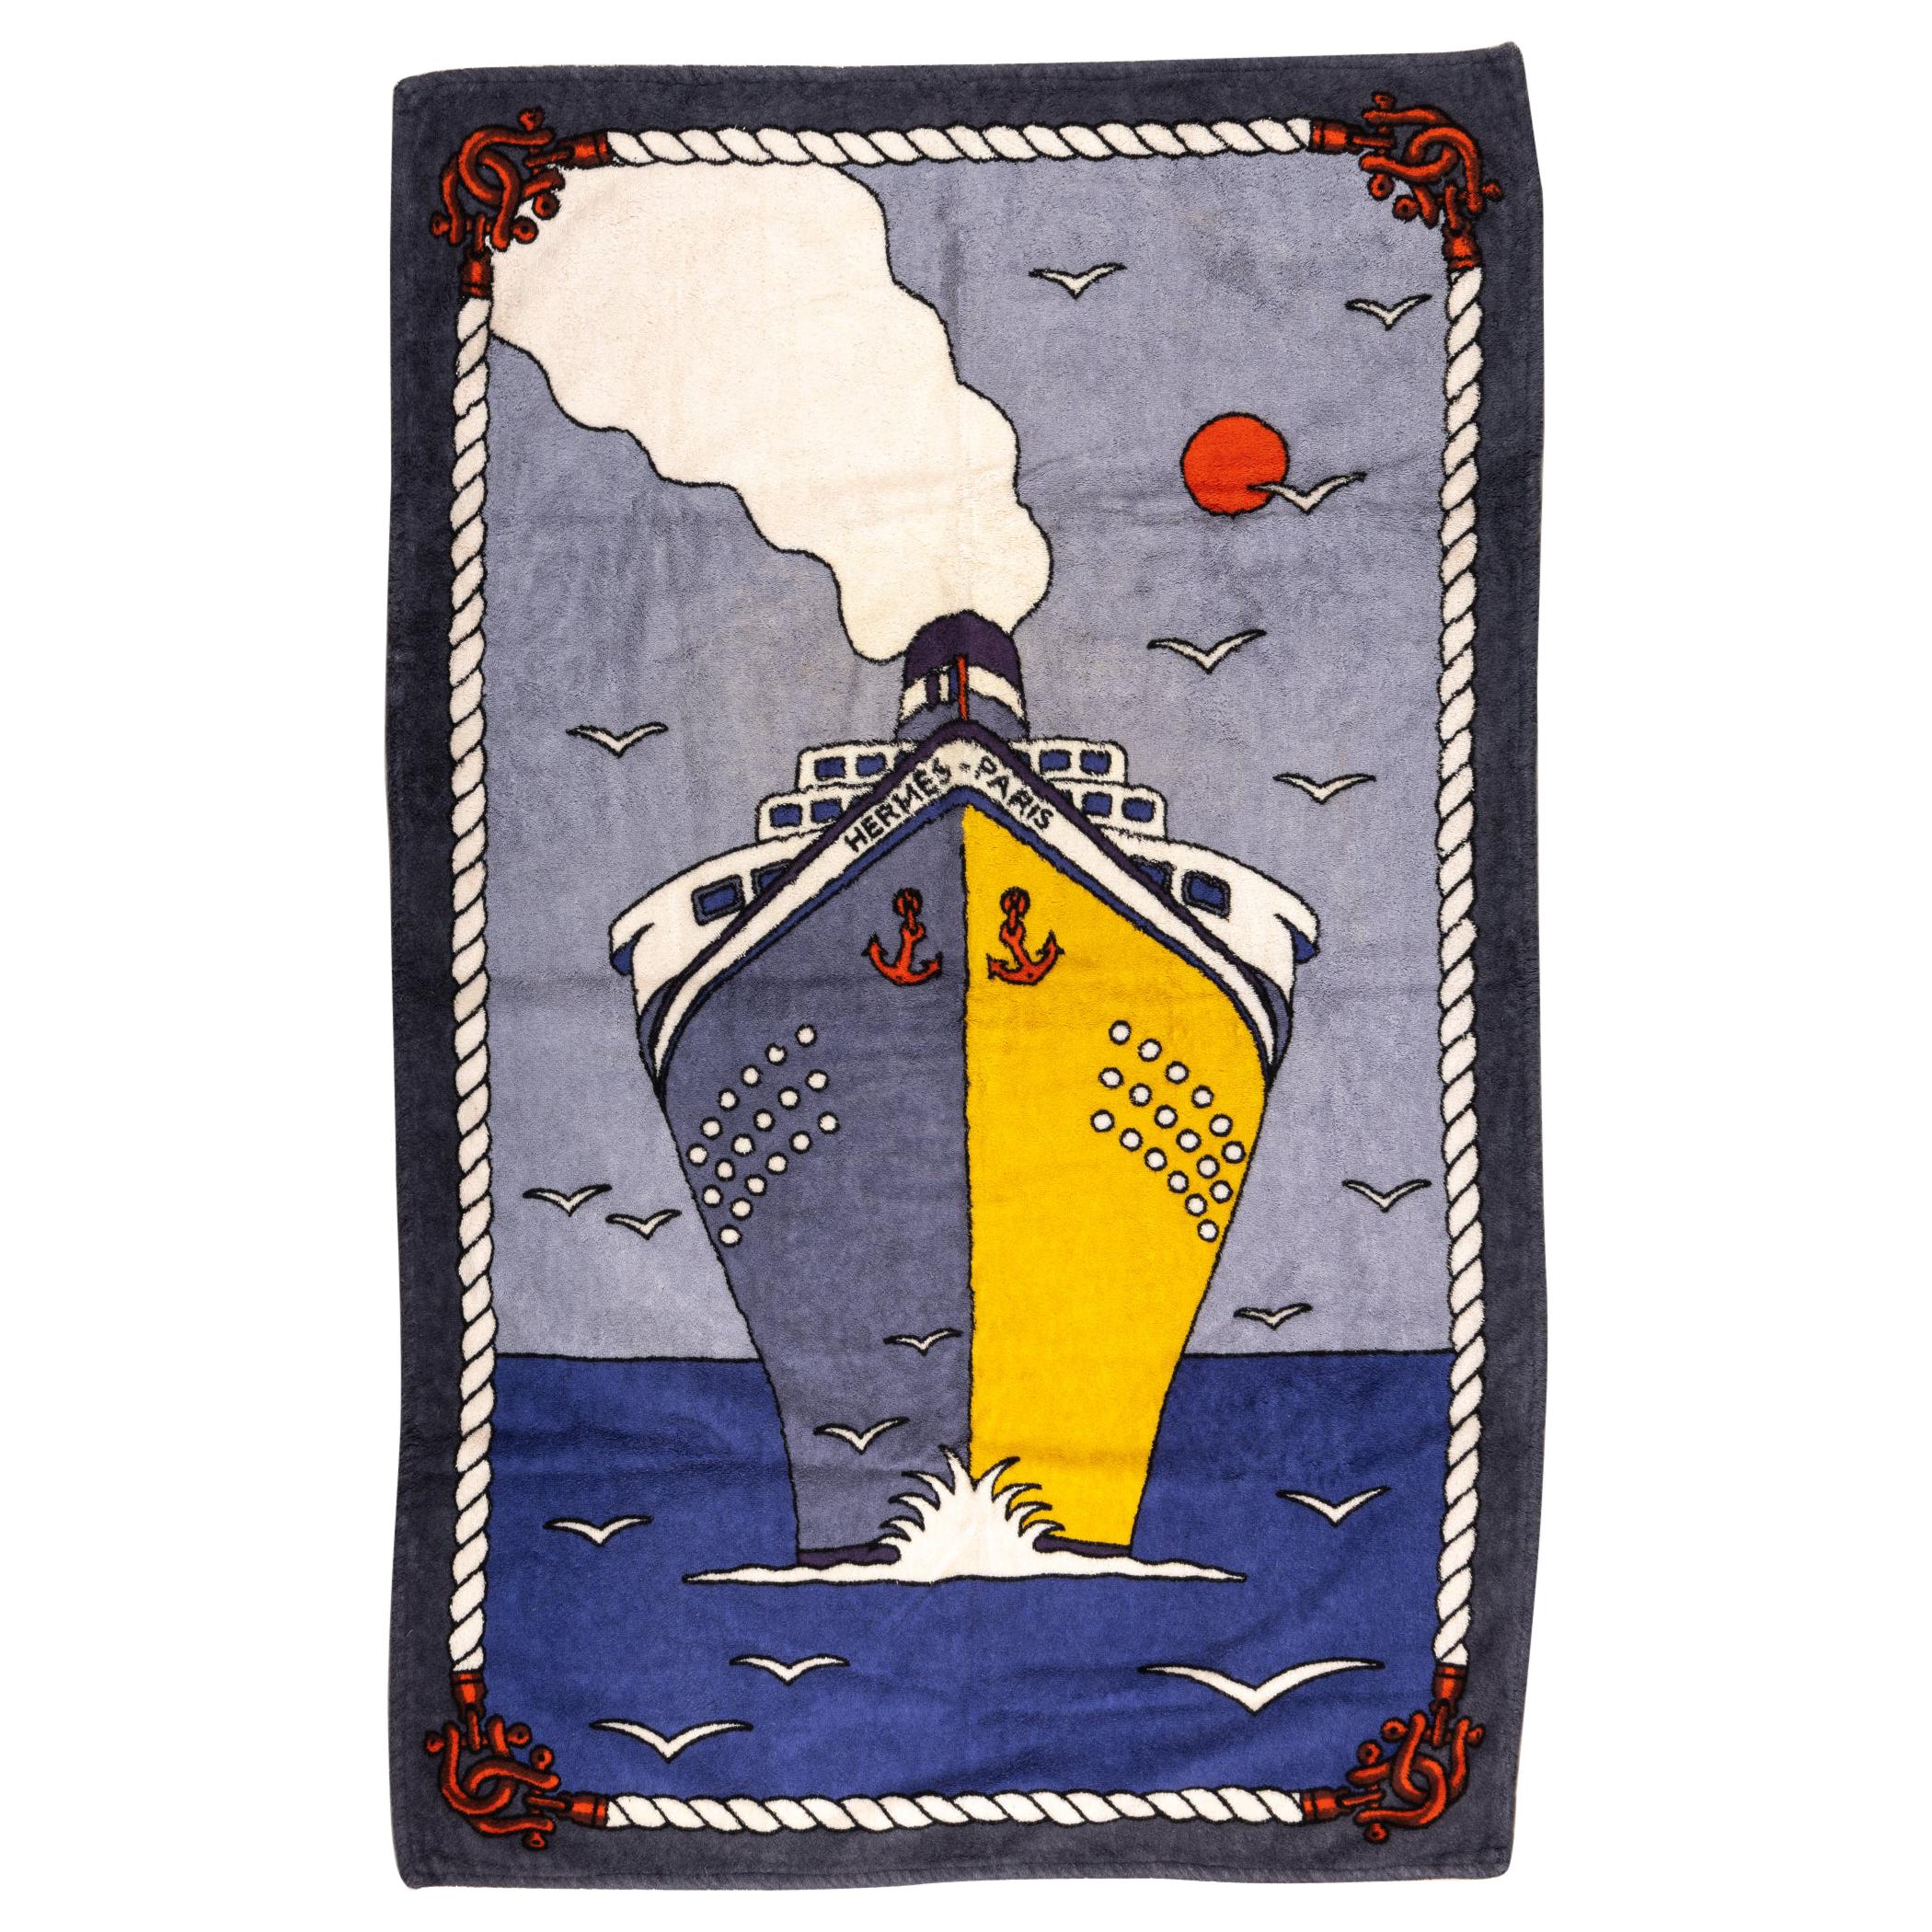 New 90s Inspired Hermes Vintage Ship Beach Towel 